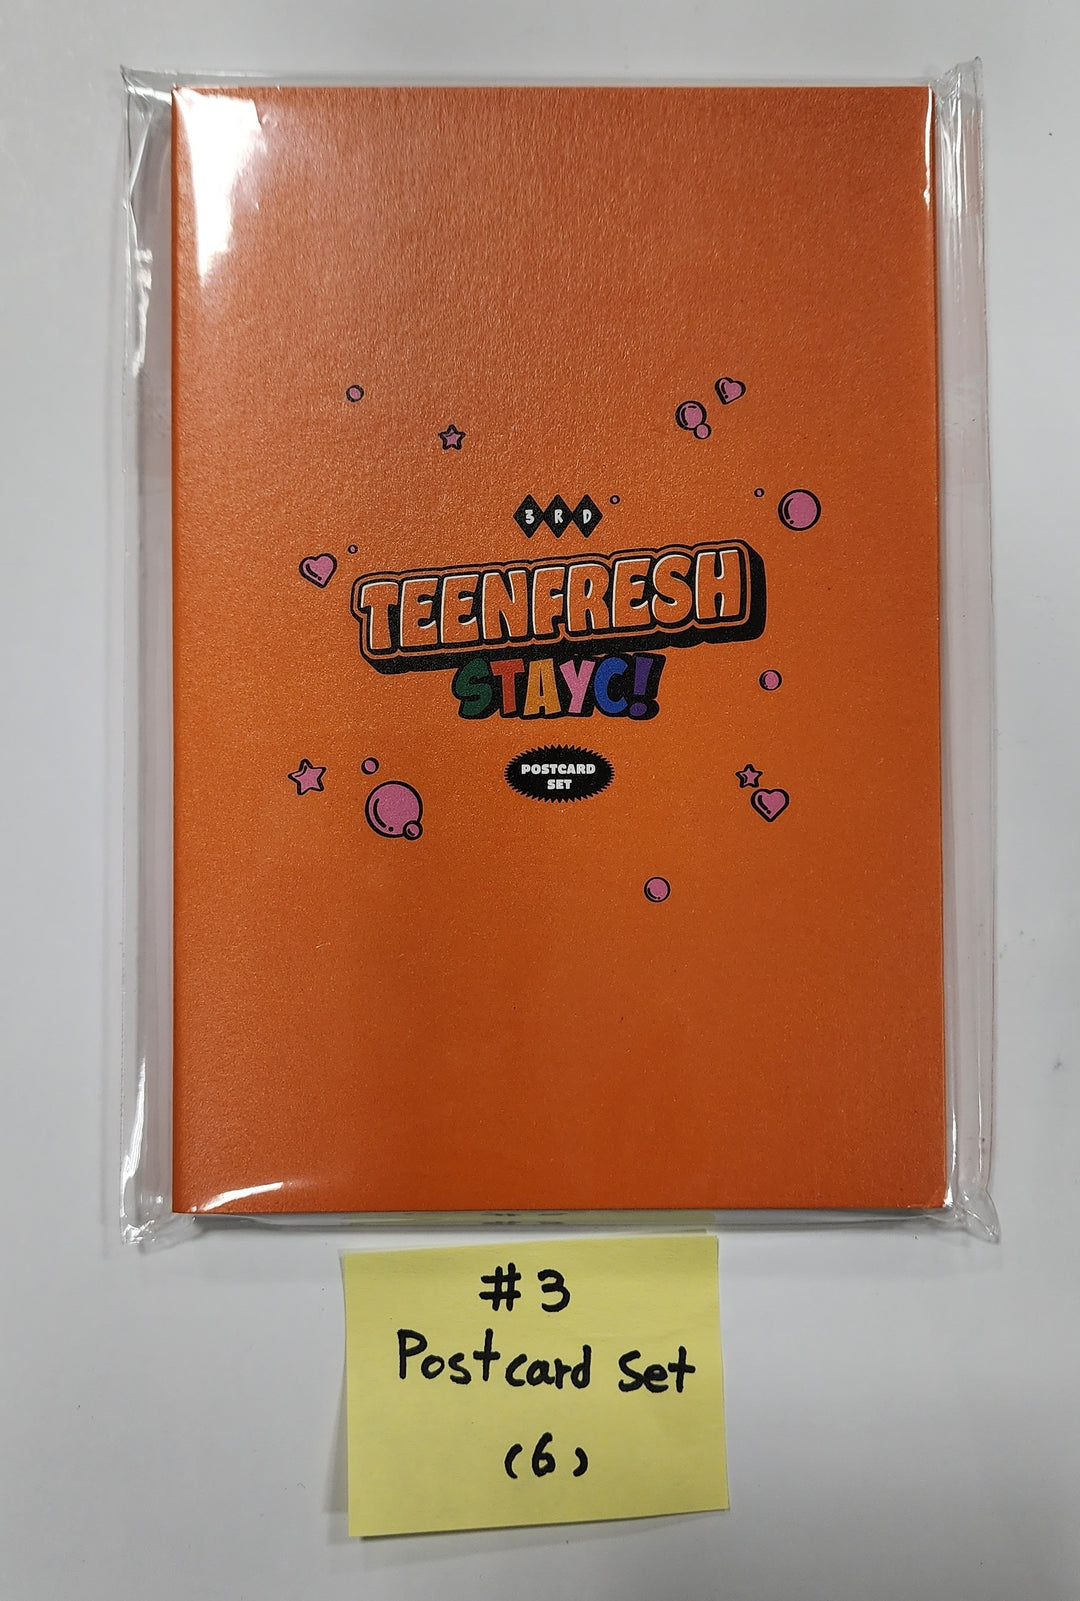 STAYC "TEENFRESH" - Withmuu Pop-Up Official MD [Acrylic Frame, Bubble Smart Tok, Postcard Set, Mesh Pouch & Metal Sticker] [23.08.22]